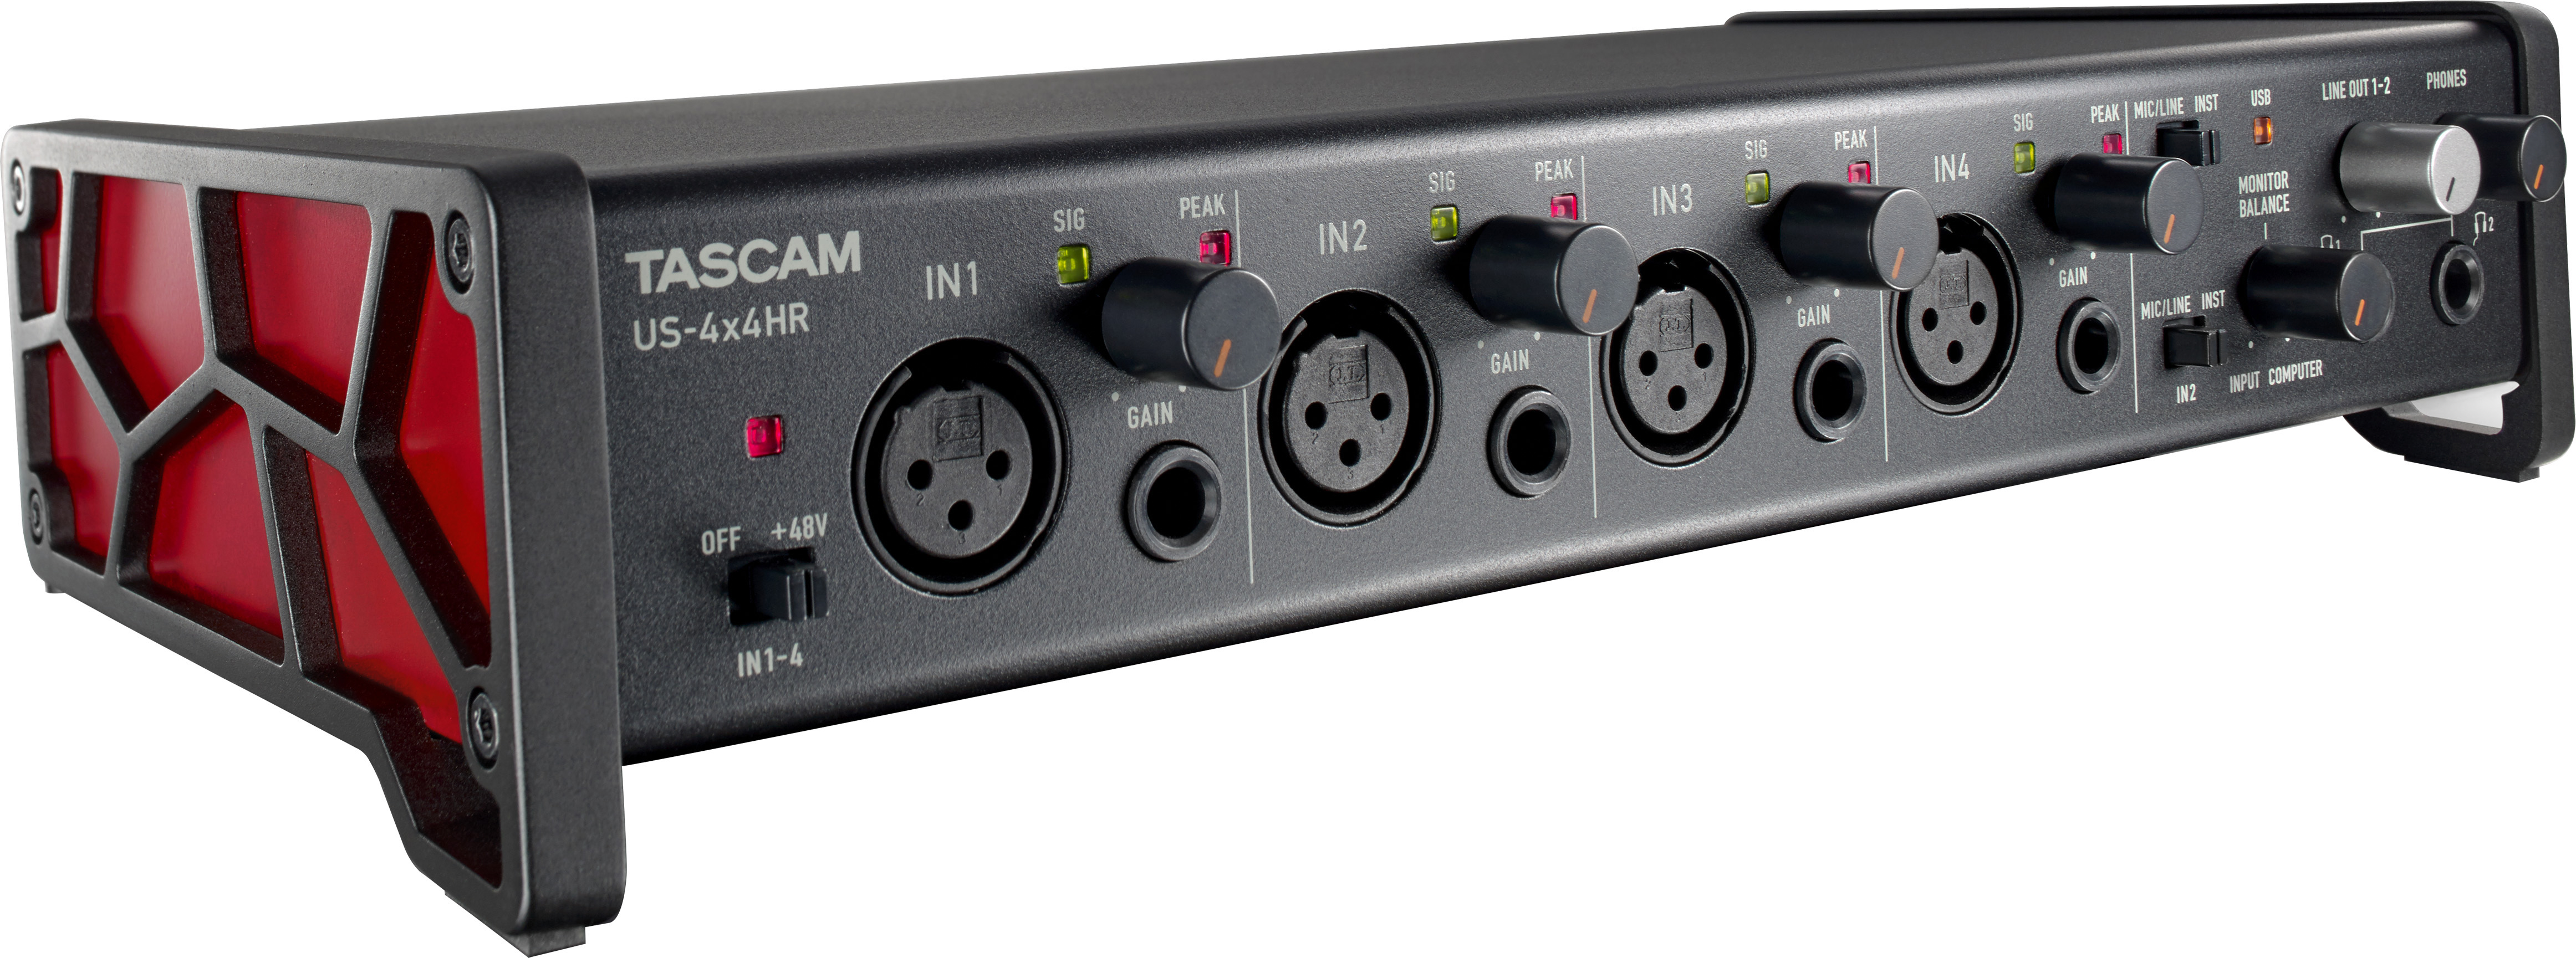 Tascam Us-4x4hr - USB audio-interface - Variation 1